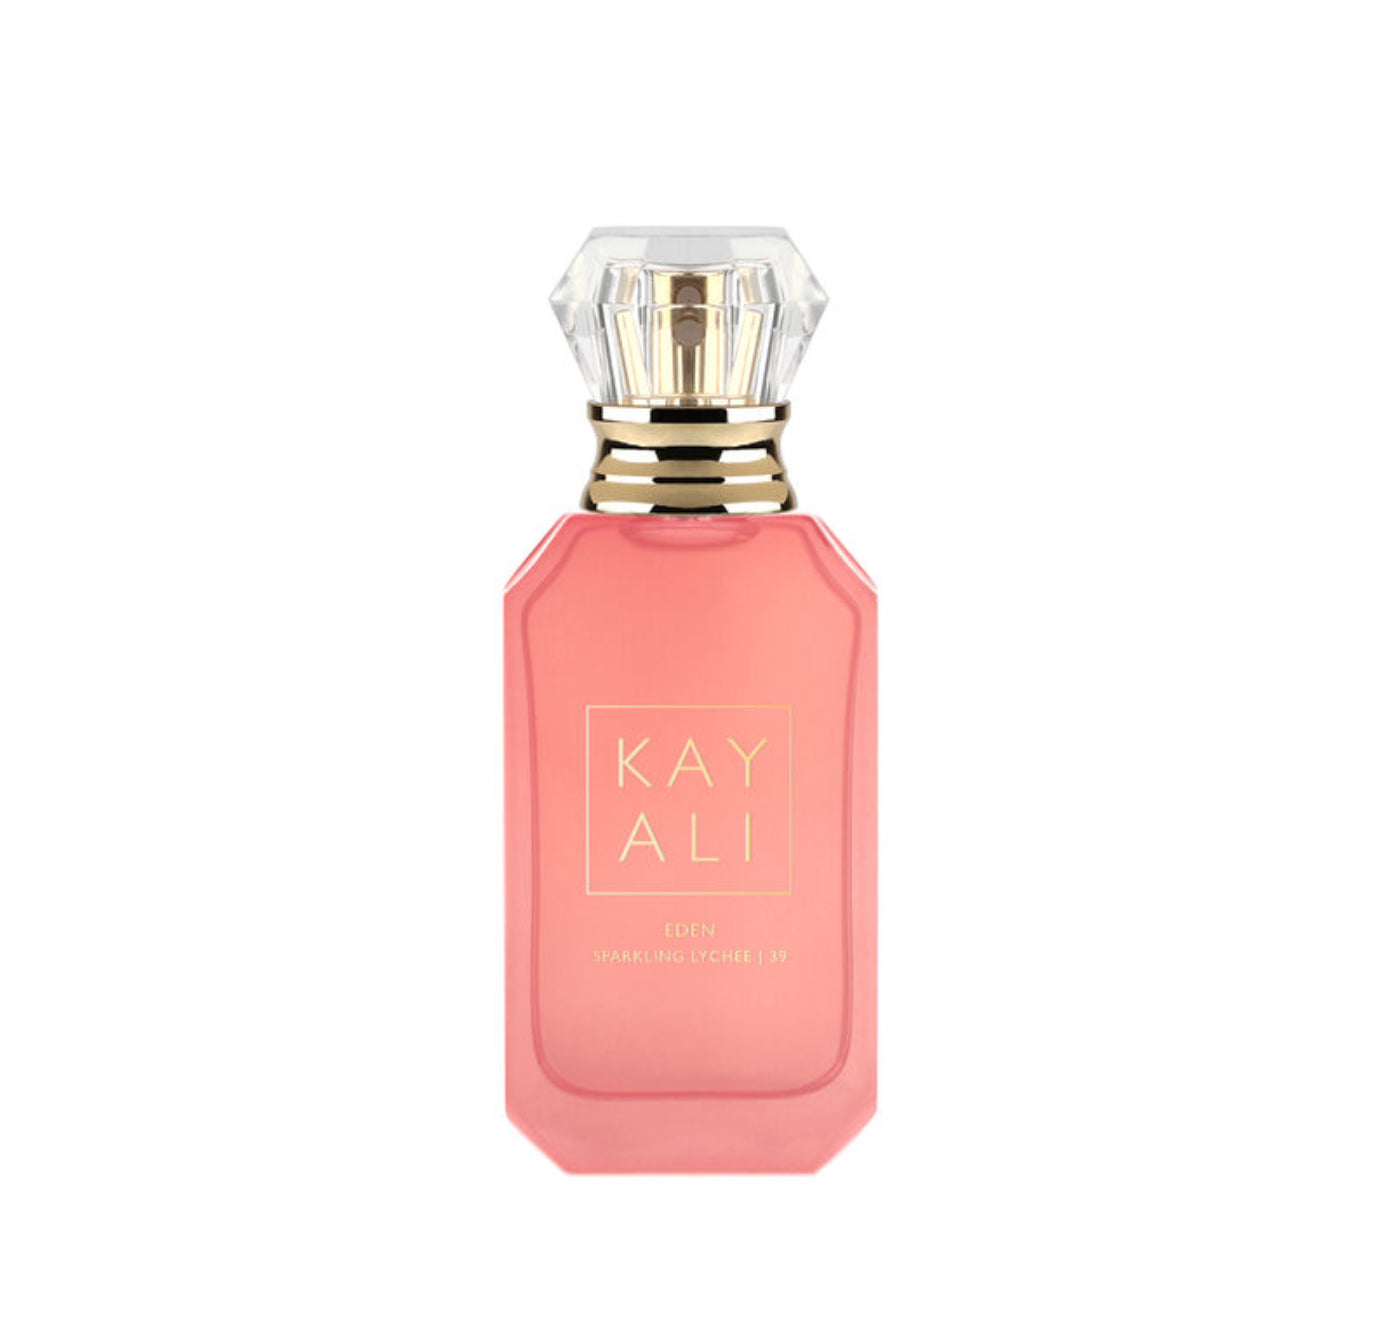 KAYALI Eden Sparkling Lychee Eau de parfum 50ml